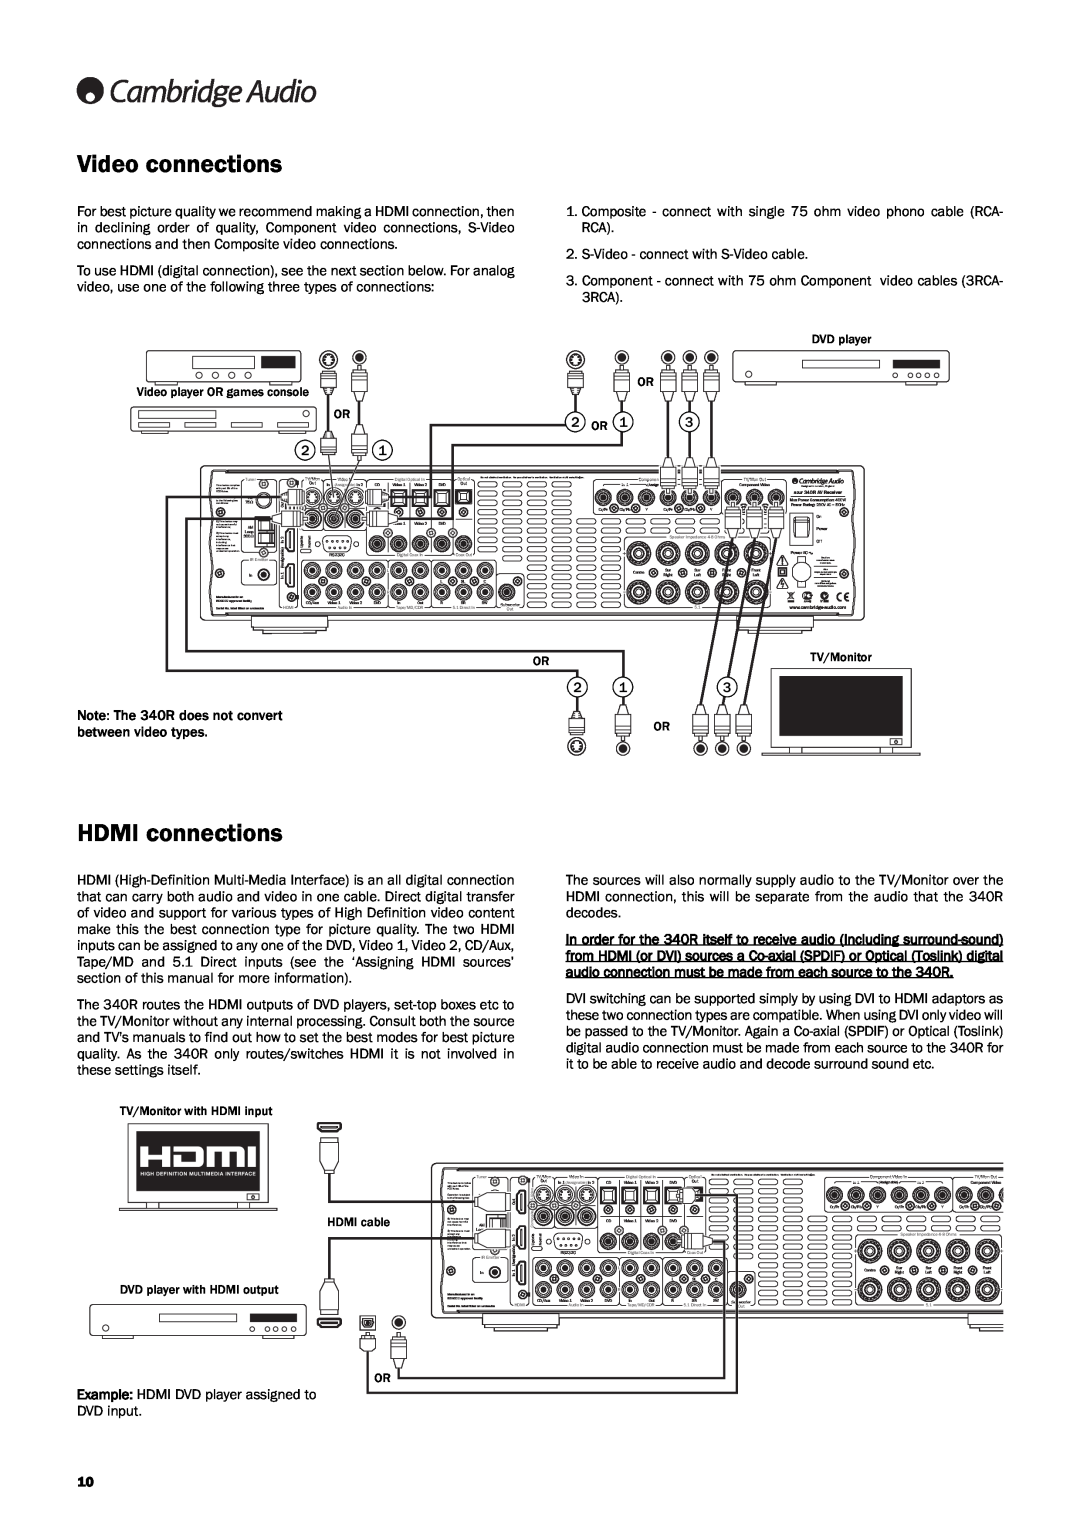 Cambridge Audio 340Razur user manual Video connections, HDMI connections 